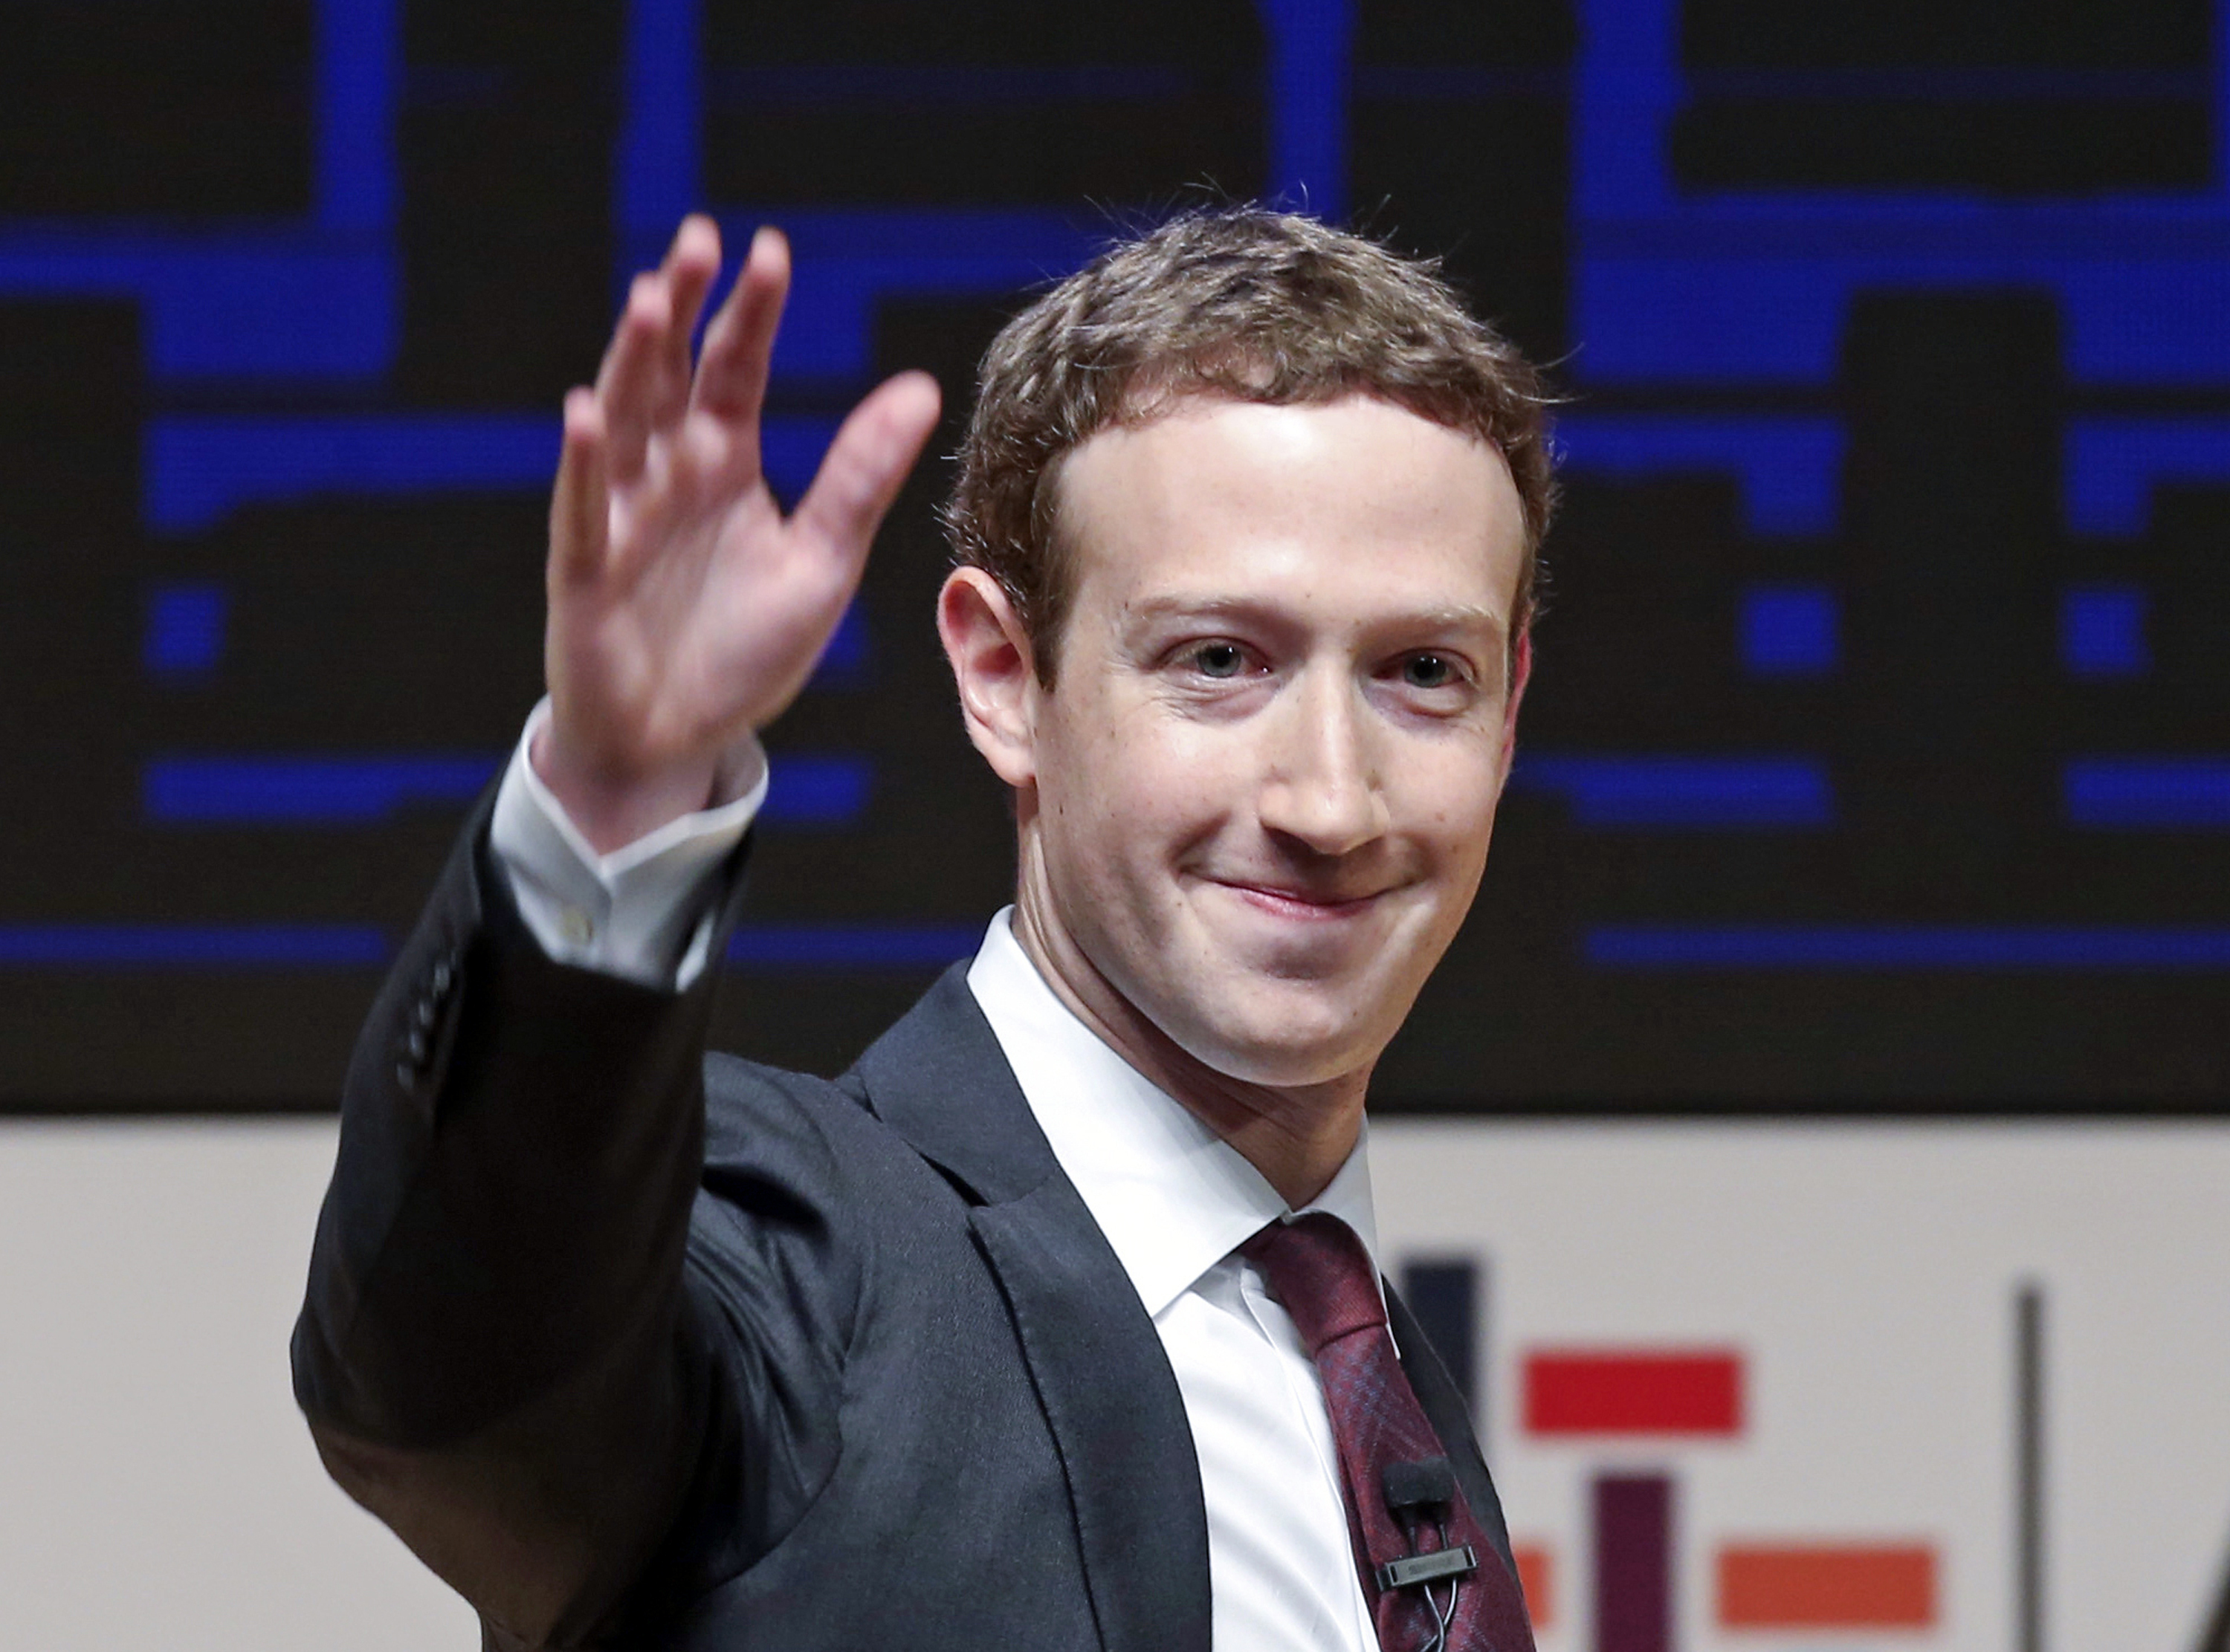 Mark Zuckerberg to receive honorary degree from Harvard Inquirer